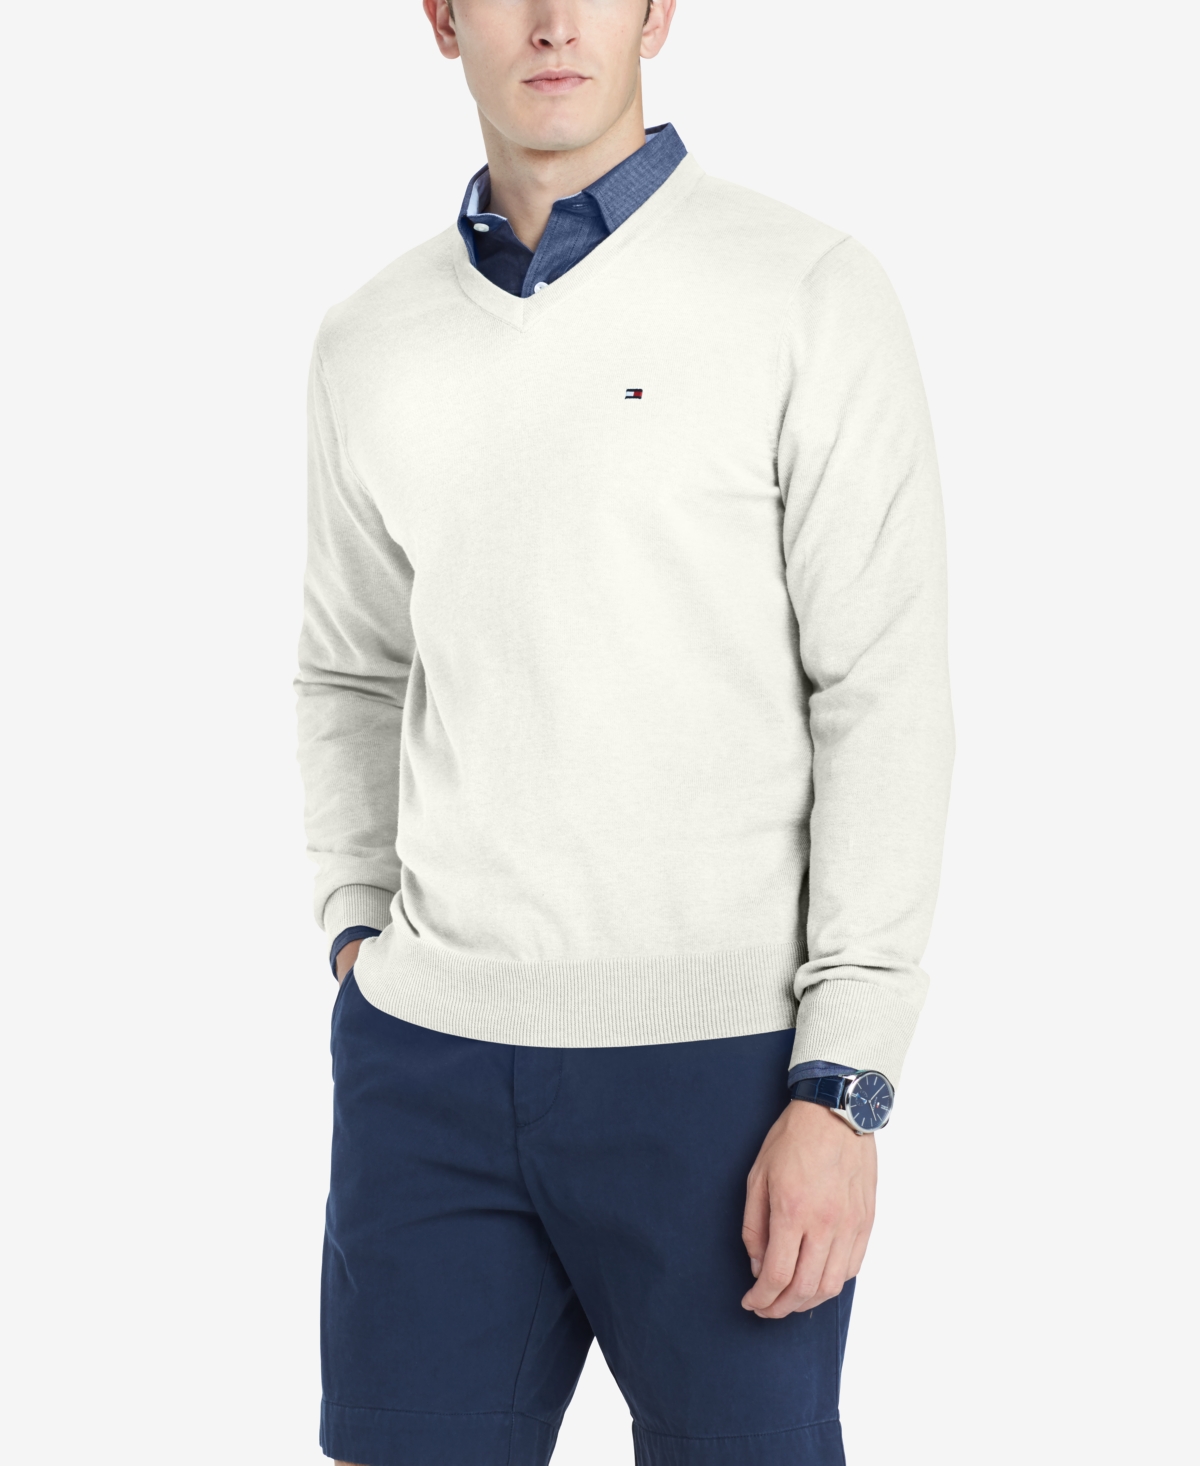 Tommy Hilfiger Men's Signature Solid V-Neck Cotton Sweater